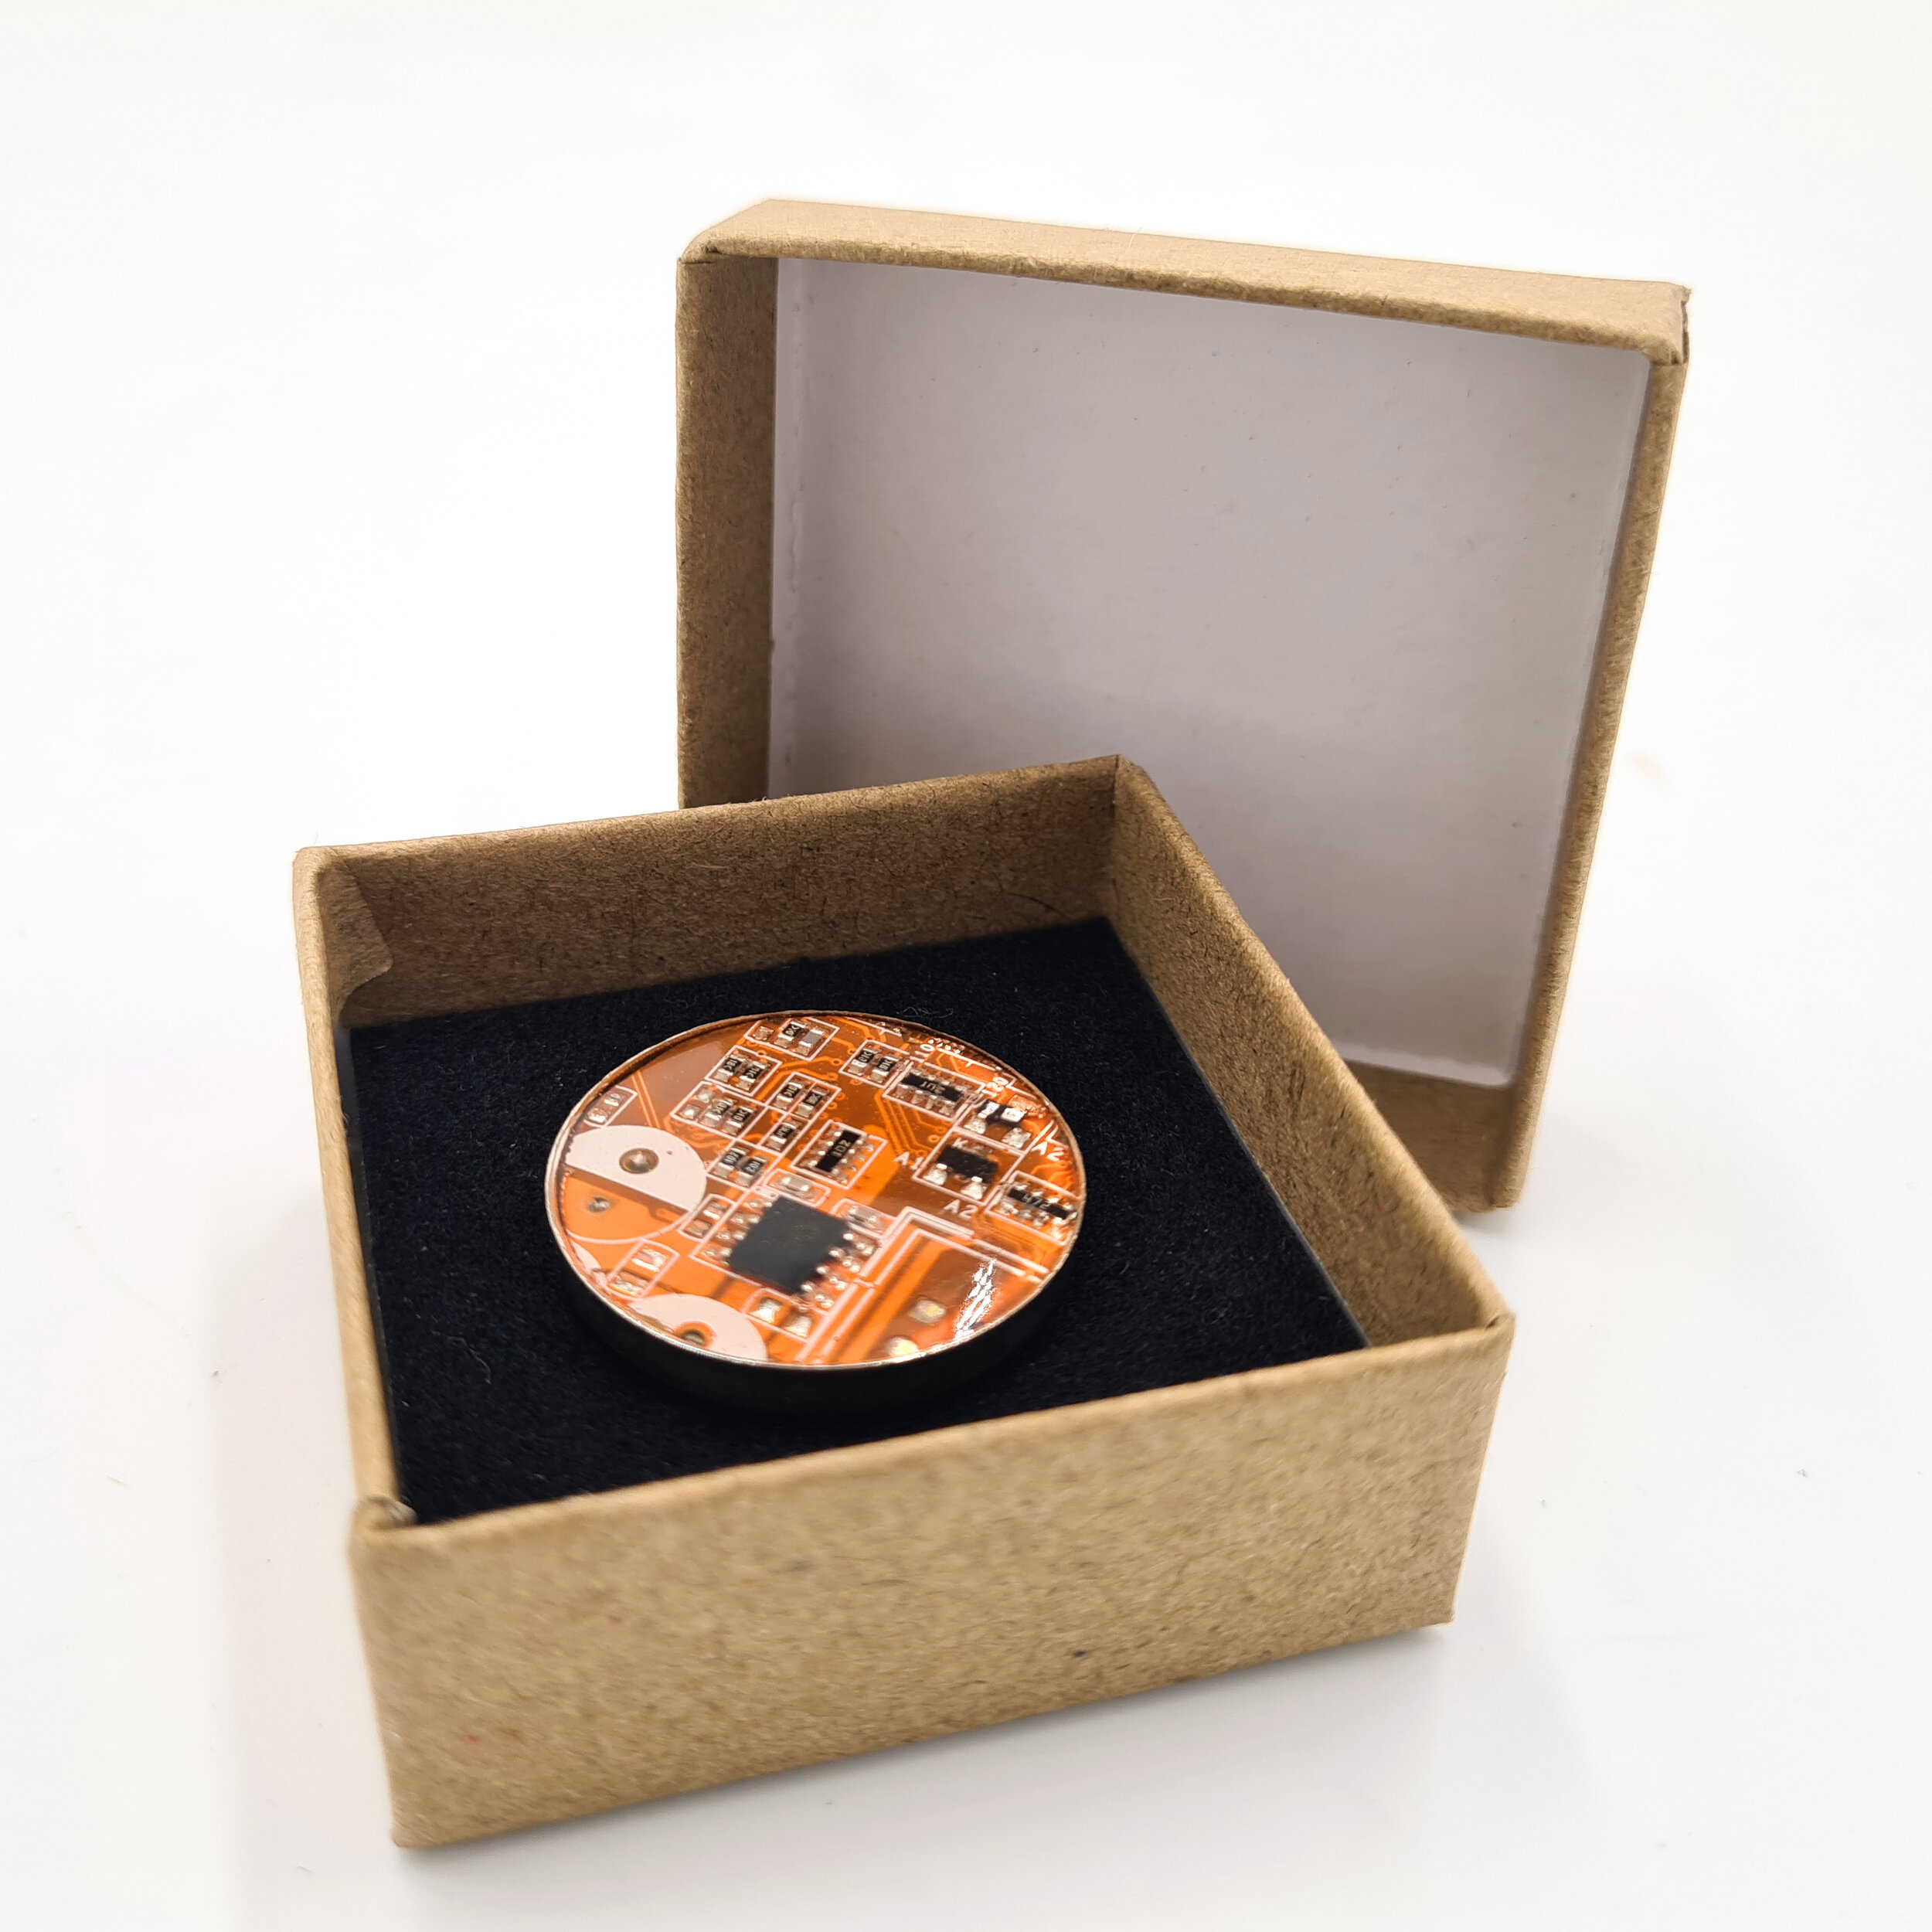 Orange Circuit board brooch in sustainable box